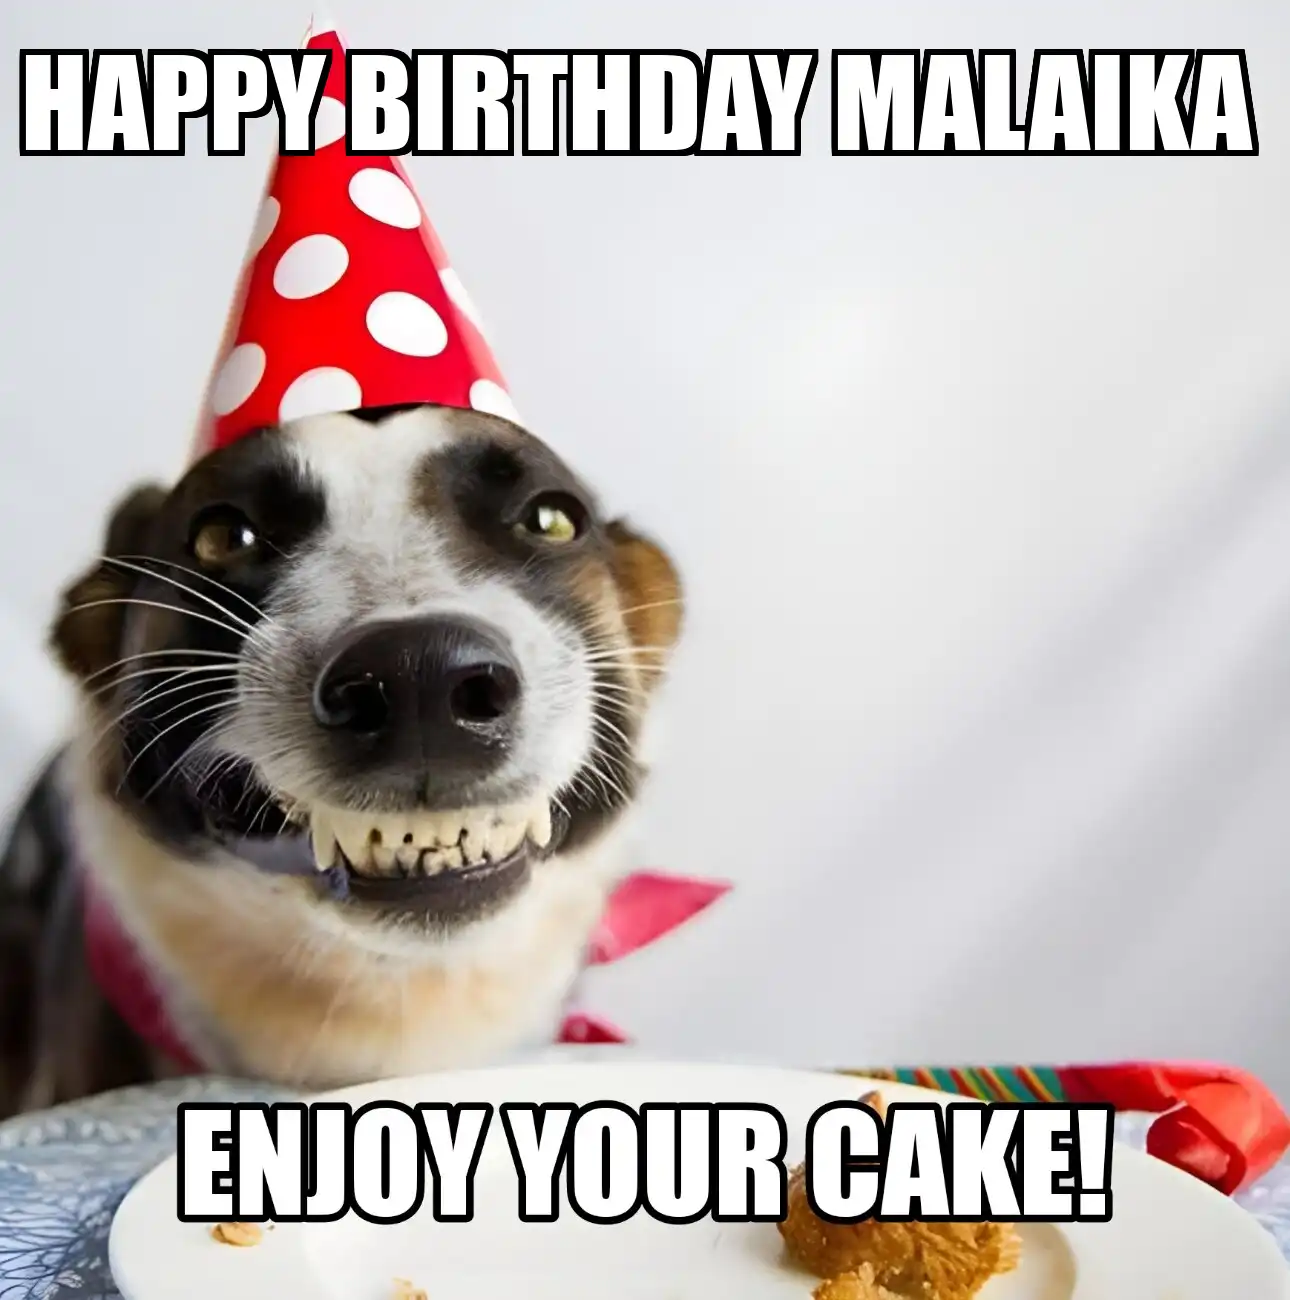 Happy Birthday Malaika Enjoy Your Cake Dog Meme